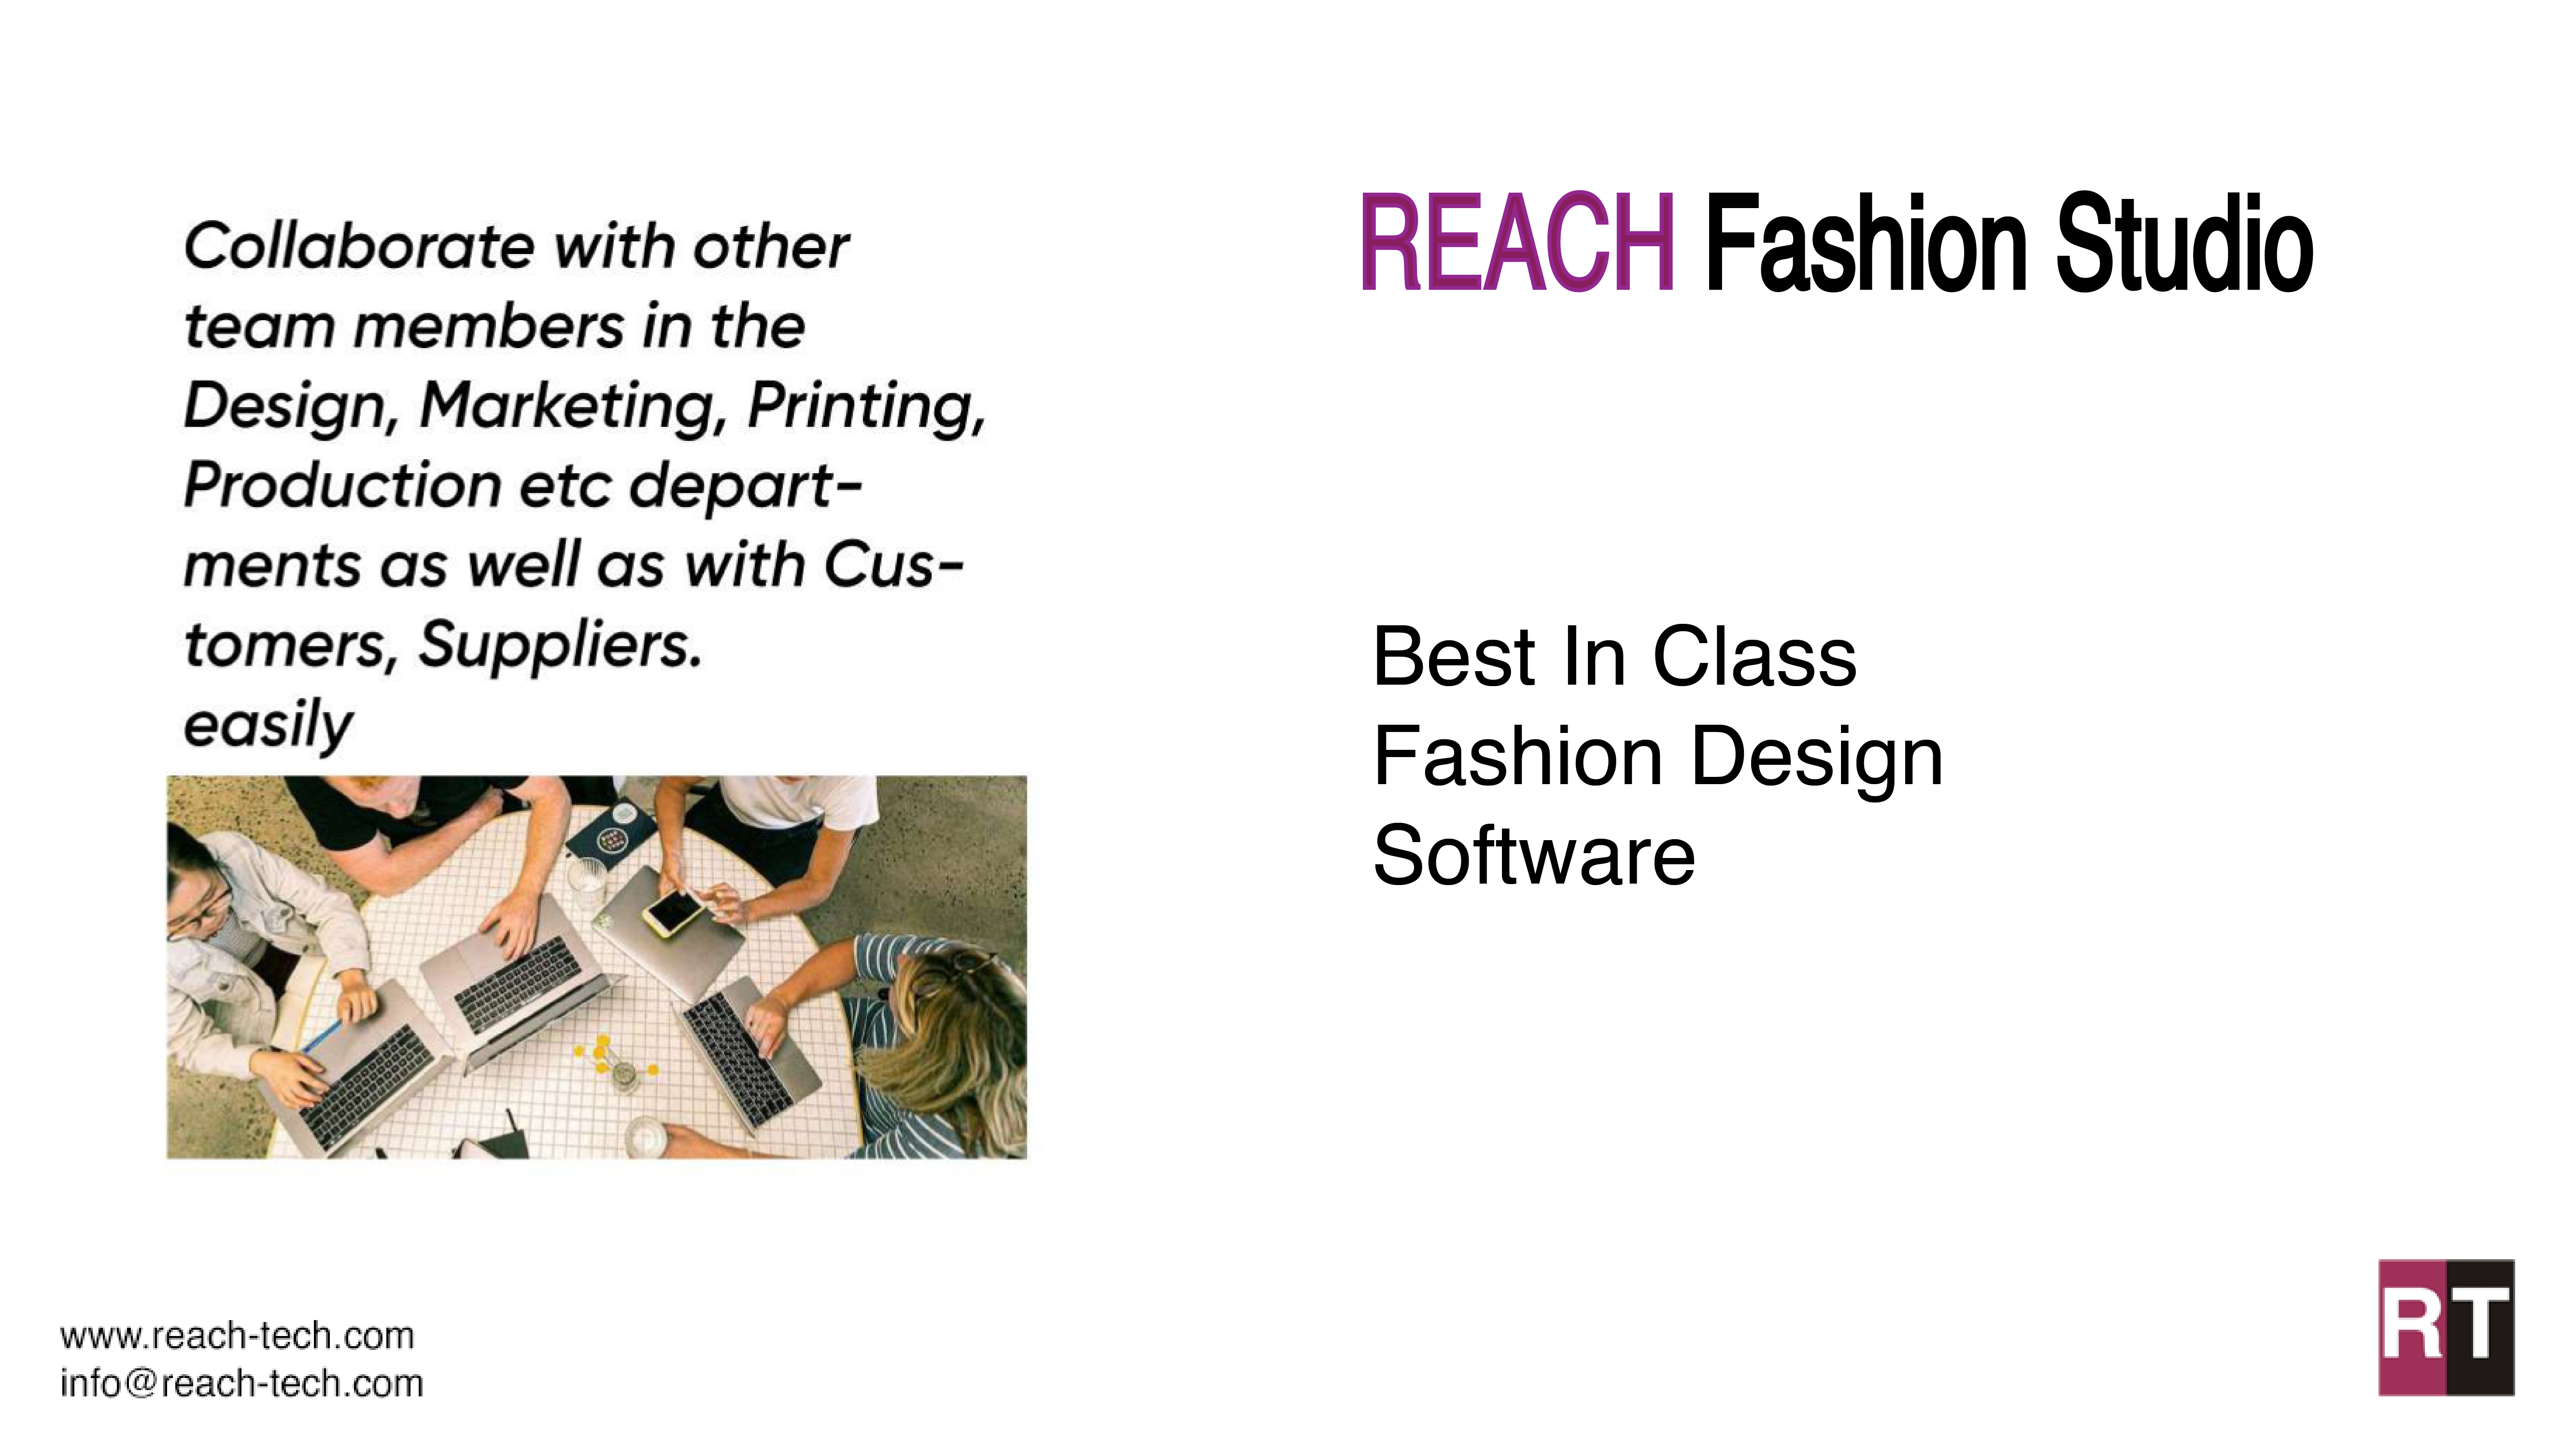 Reach Fashion Studio poster Image 21